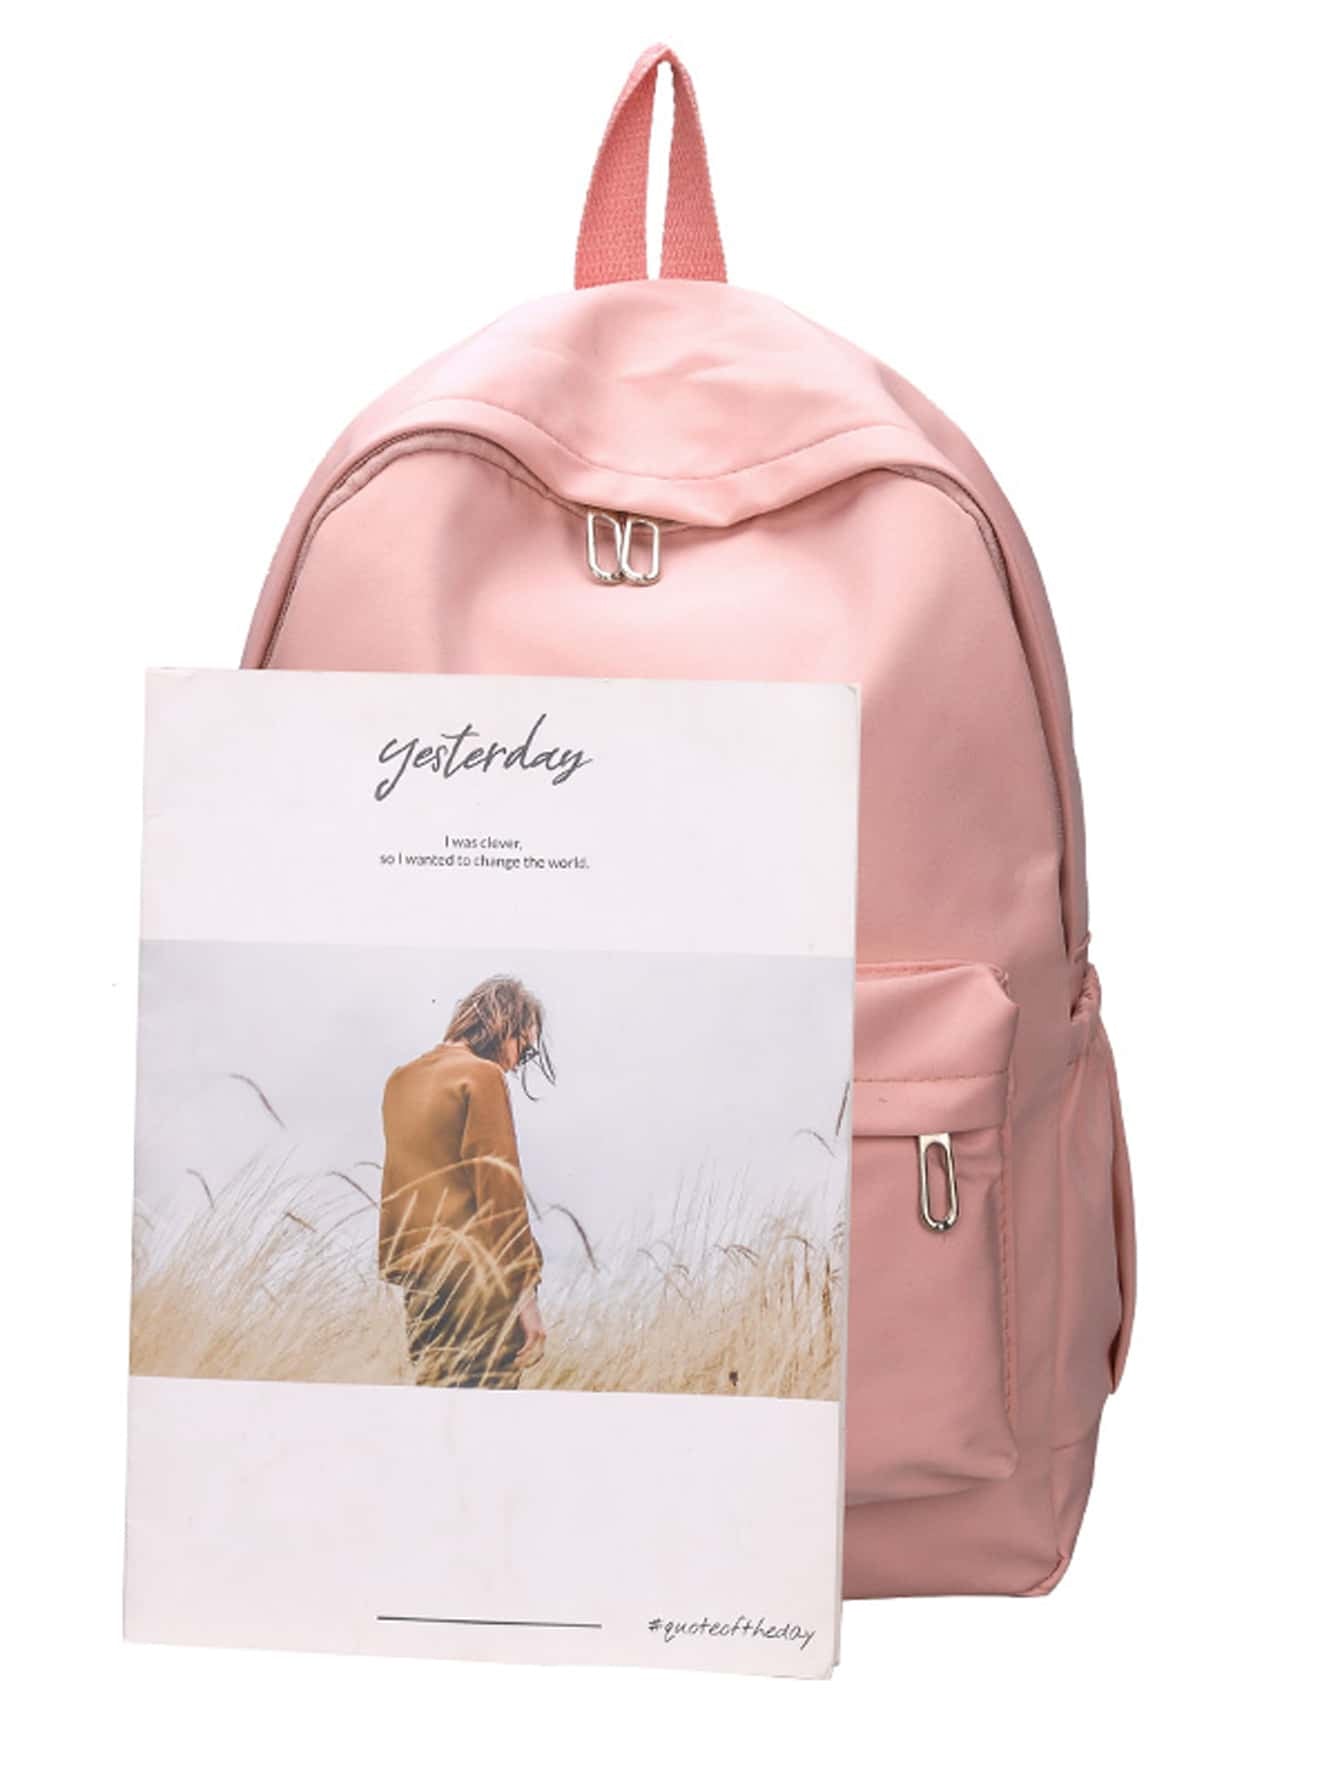 Minimalist Large Capacity Functional Backpack - Pink